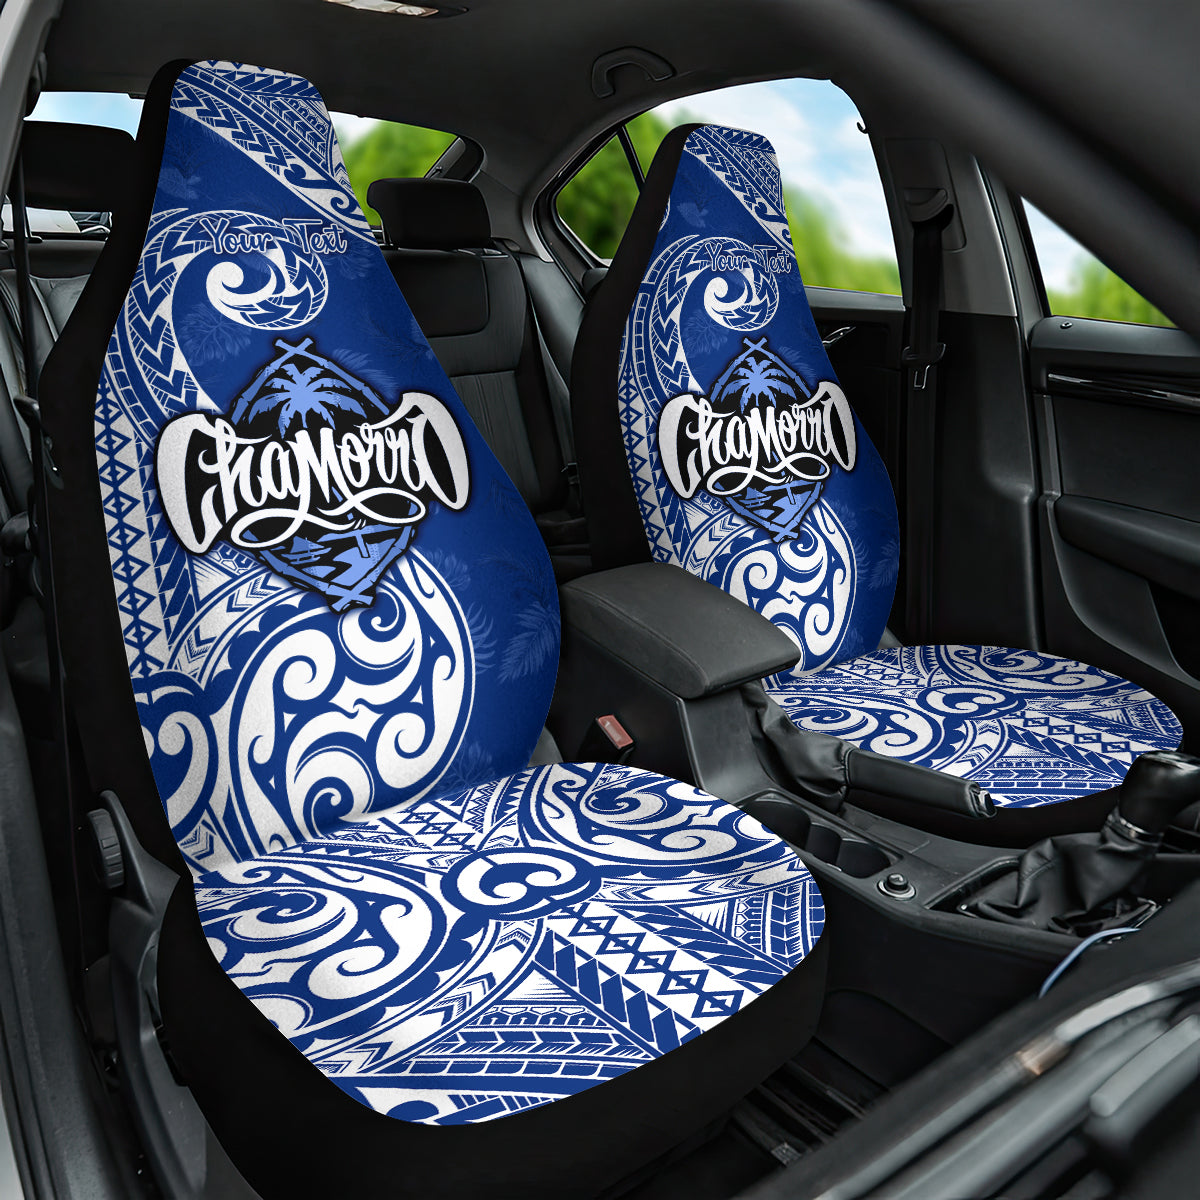 Personalised Hafa Adai Guam History and Chamorro Heritage Day Car Seat Cover Blue Latte Stone LT05 One Size Blue - Polynesian Pride